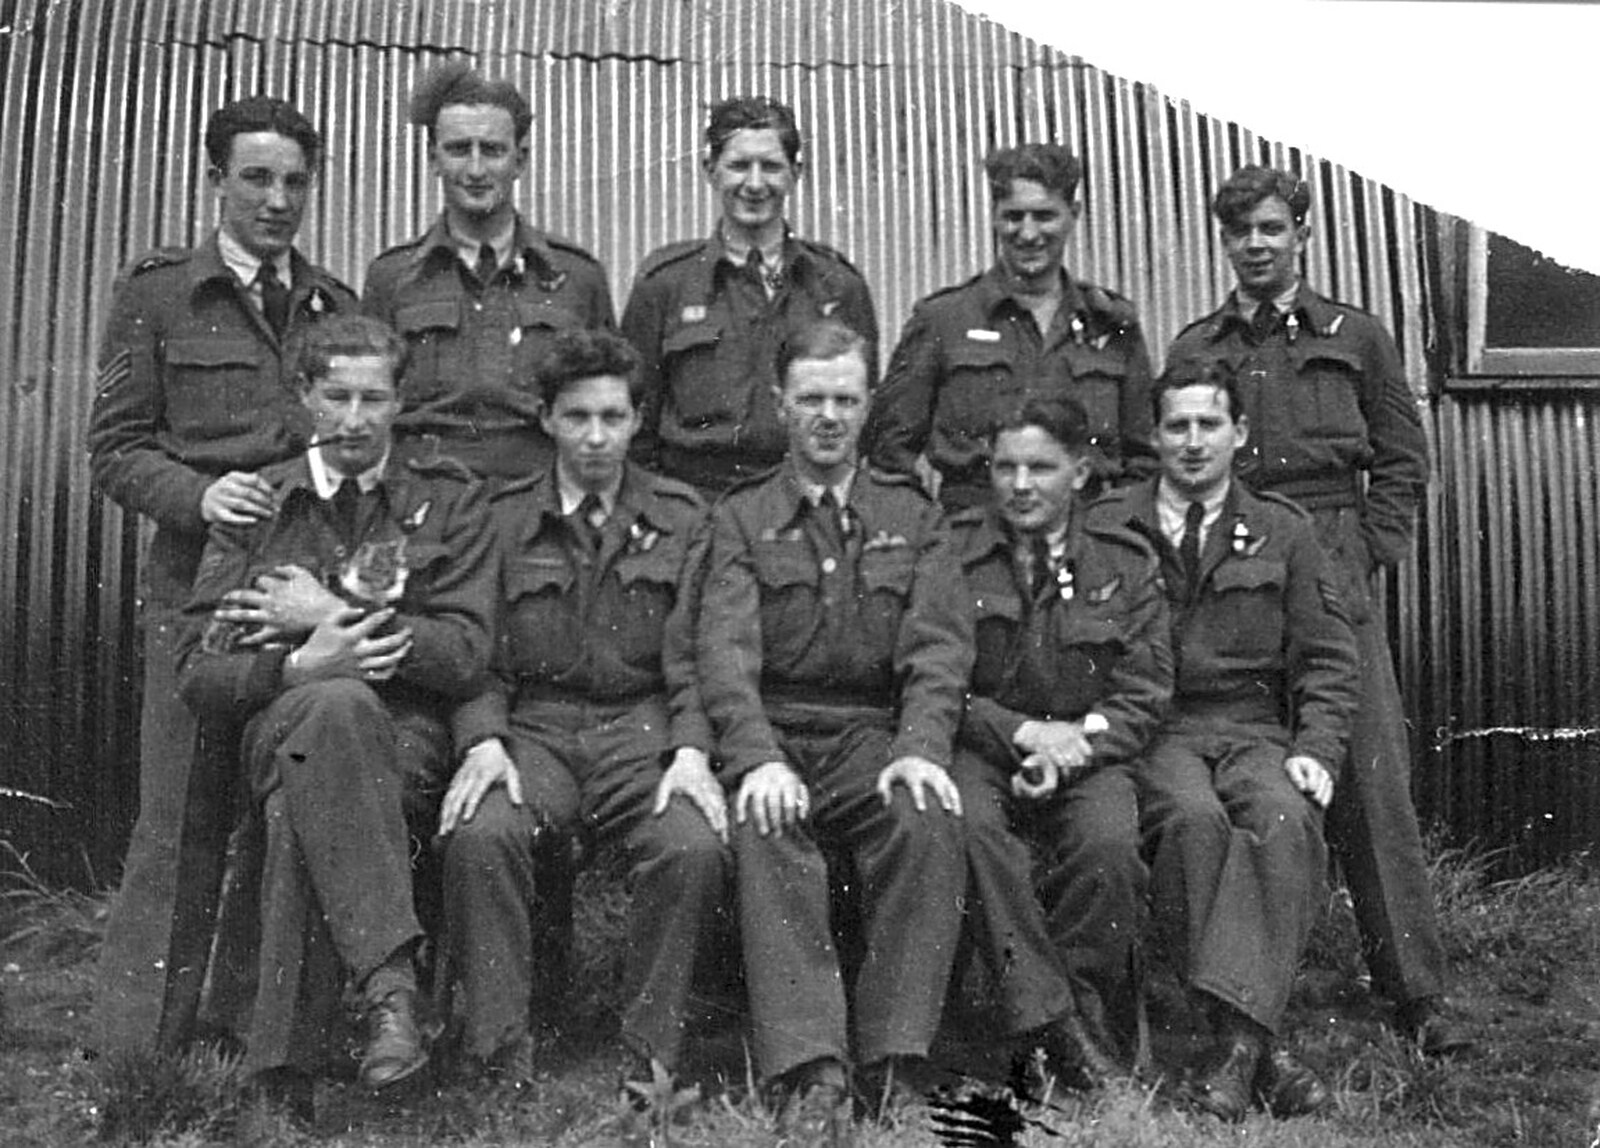 Grandad's RAF Days - Miscellaneous Dates: A wartime crew photo